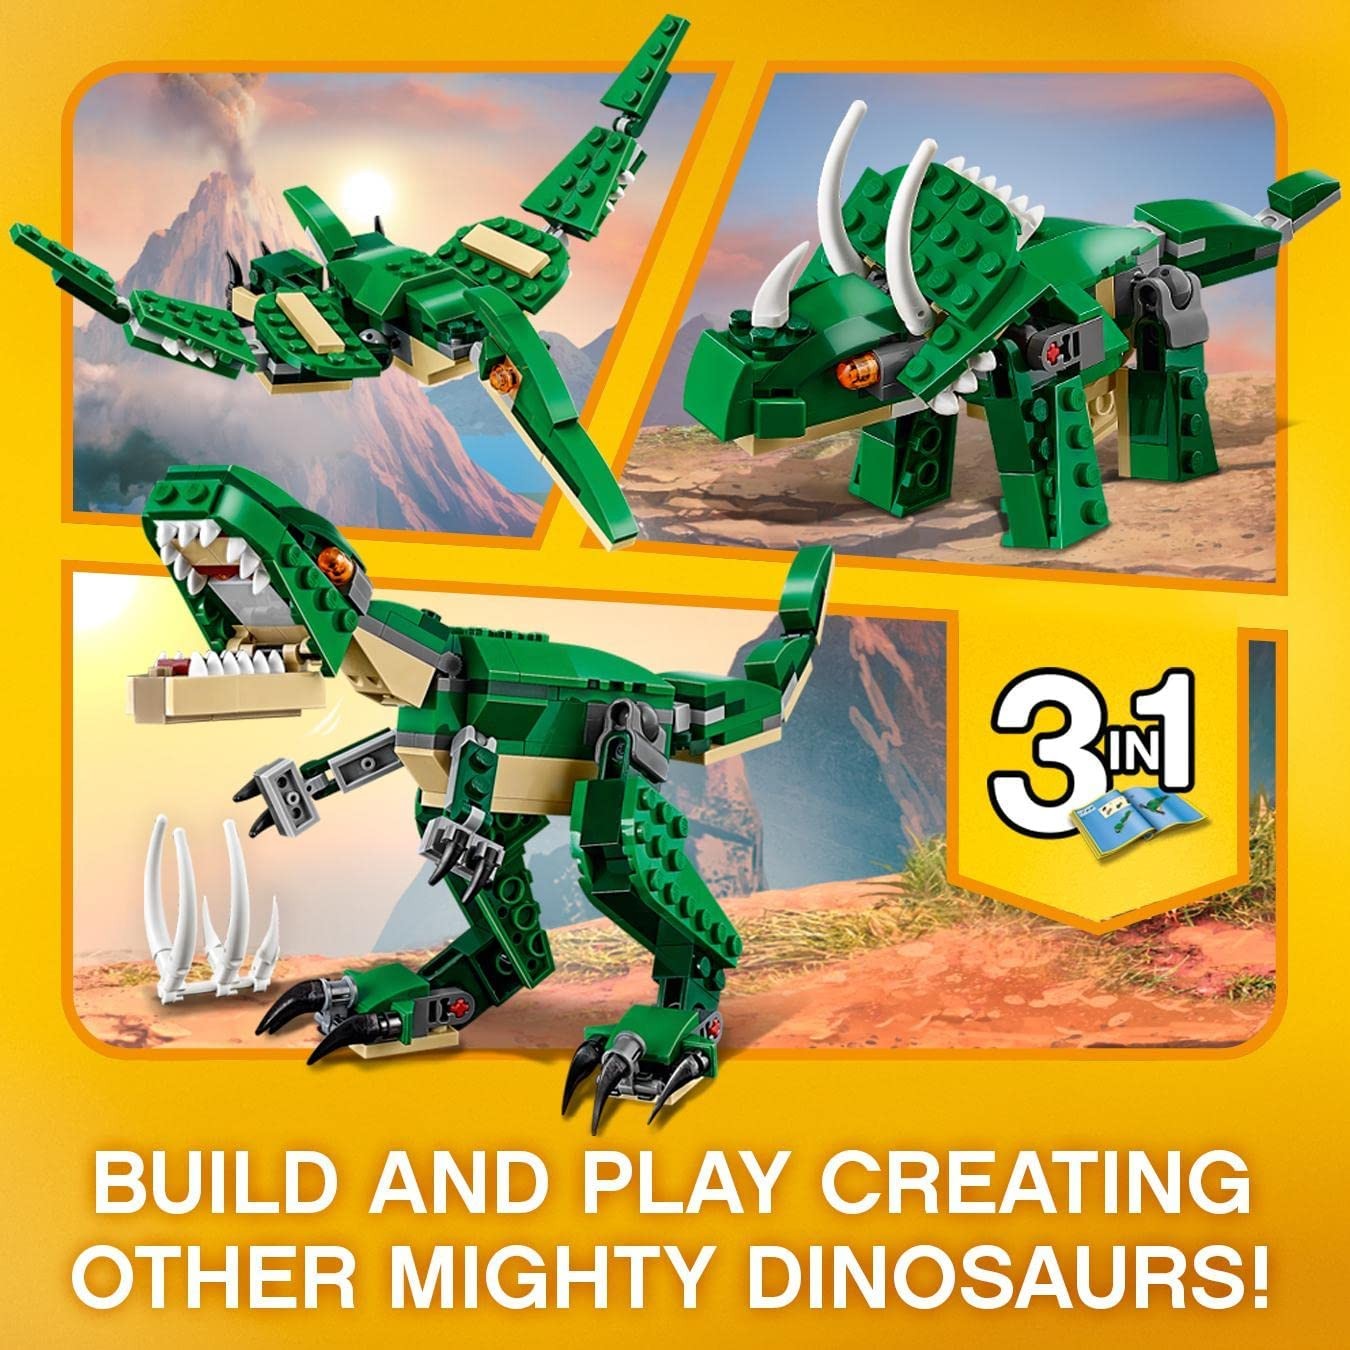 LEGO Creator - 31058 Dinosaur, 1 item